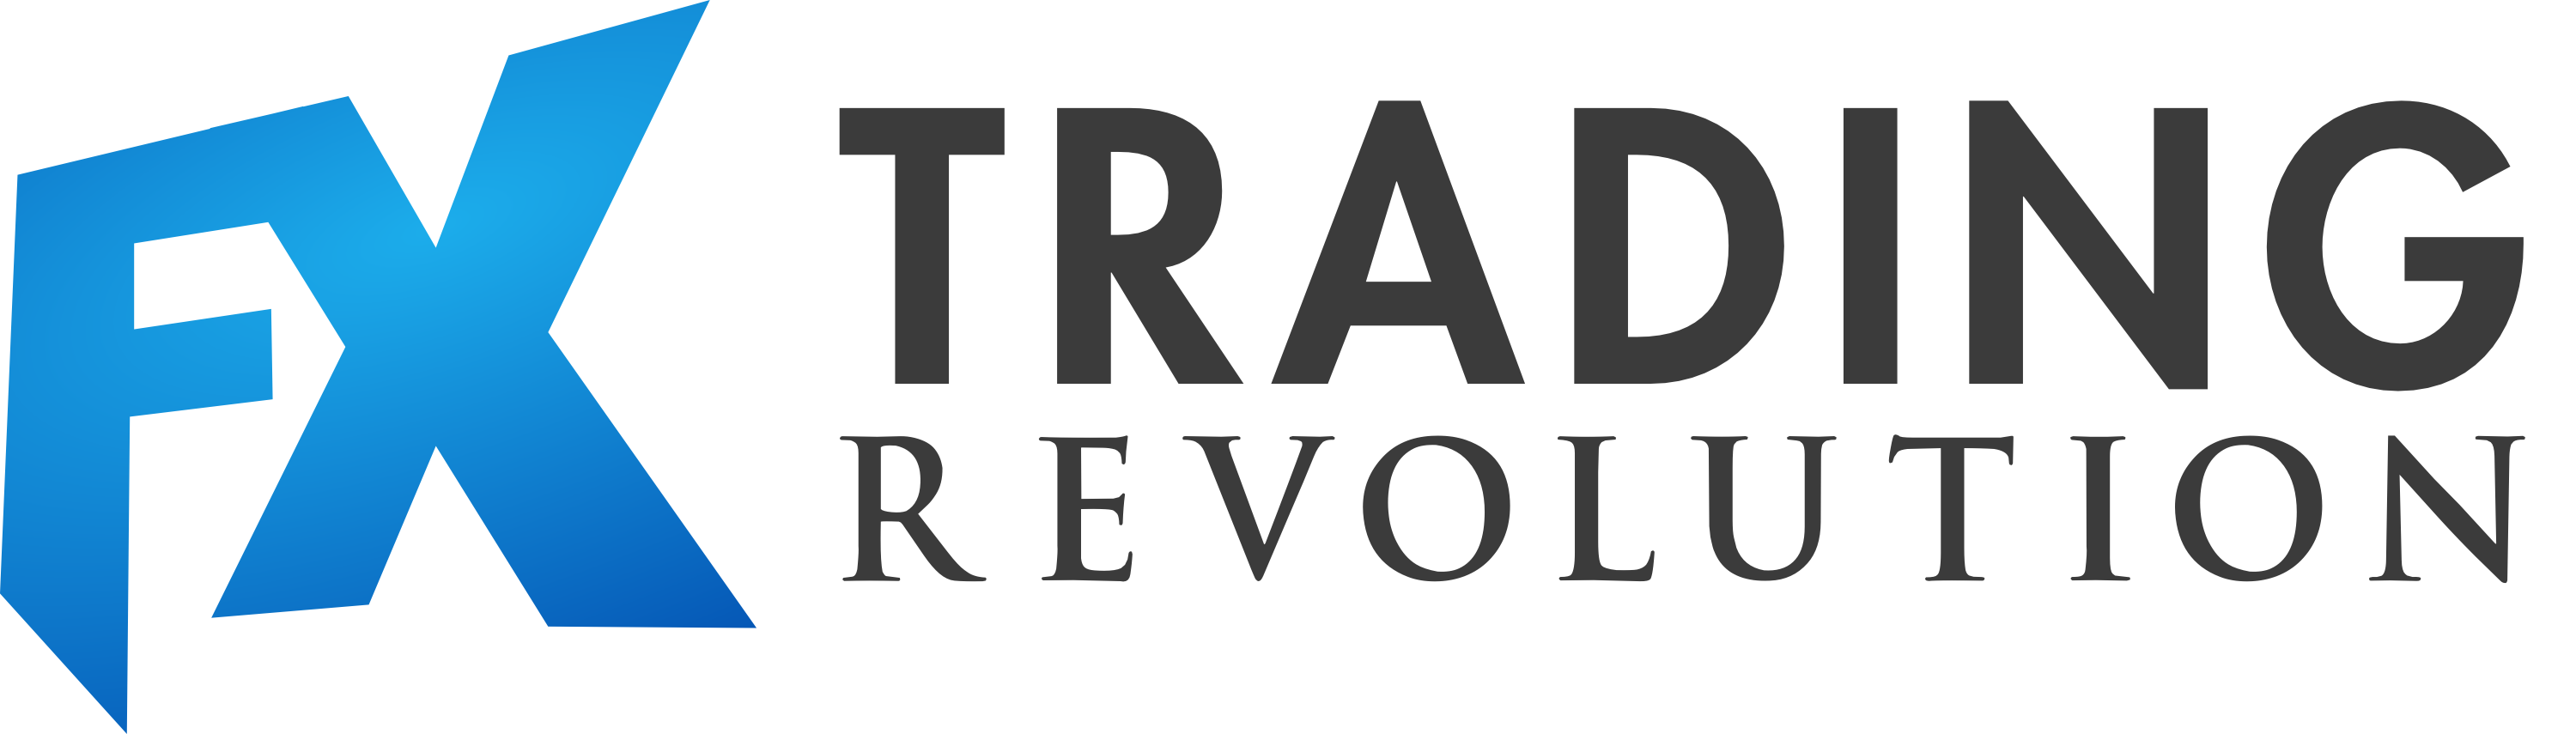 FX Trading Revolution by Take Profit sro